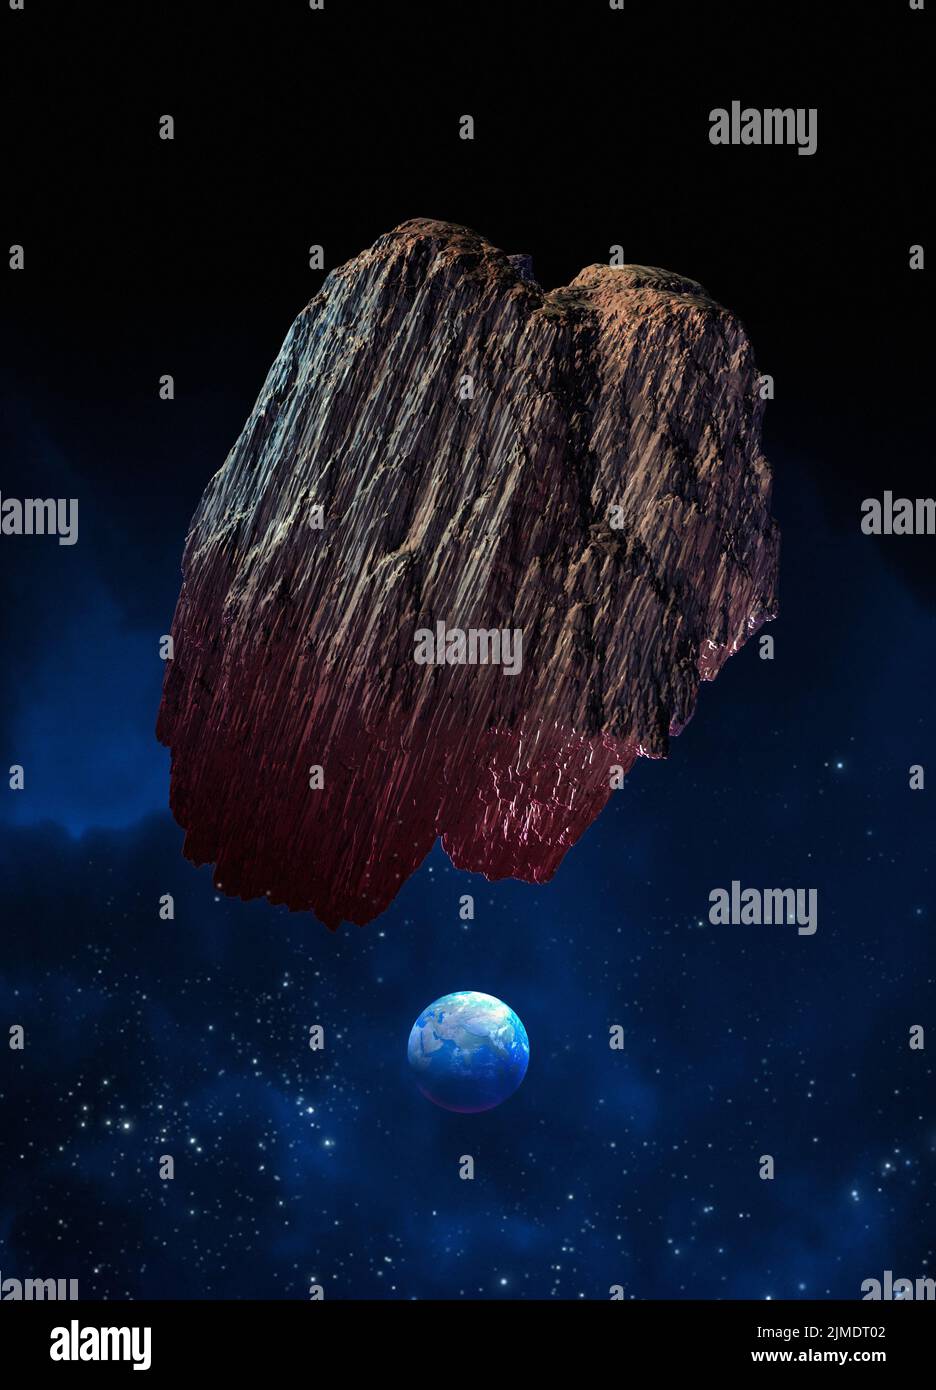 Large asteroid heading towards Earth, illustration. Stock Photo